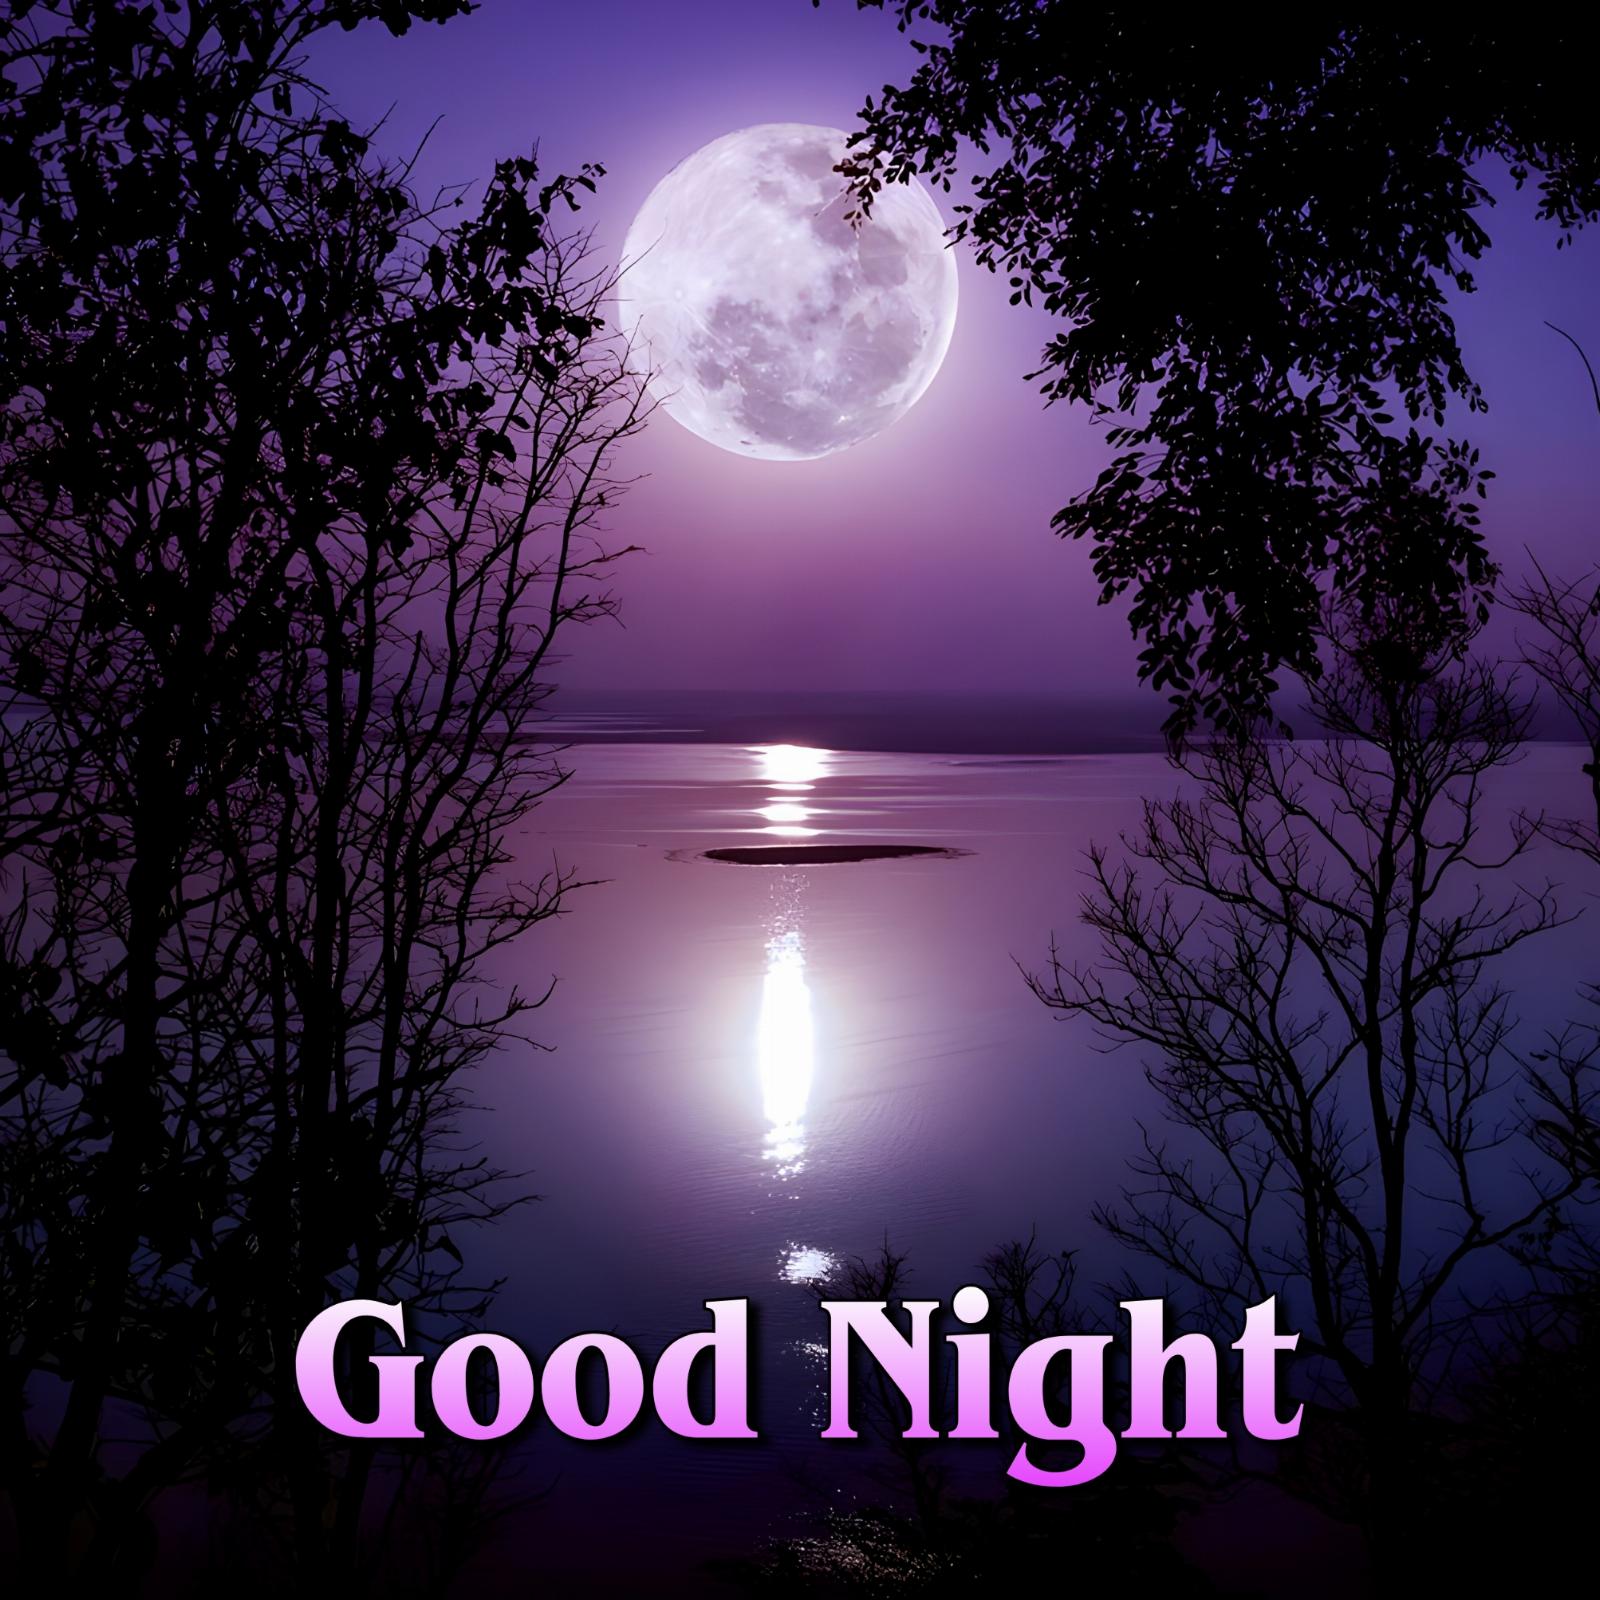 Good Night Moon Images Hd